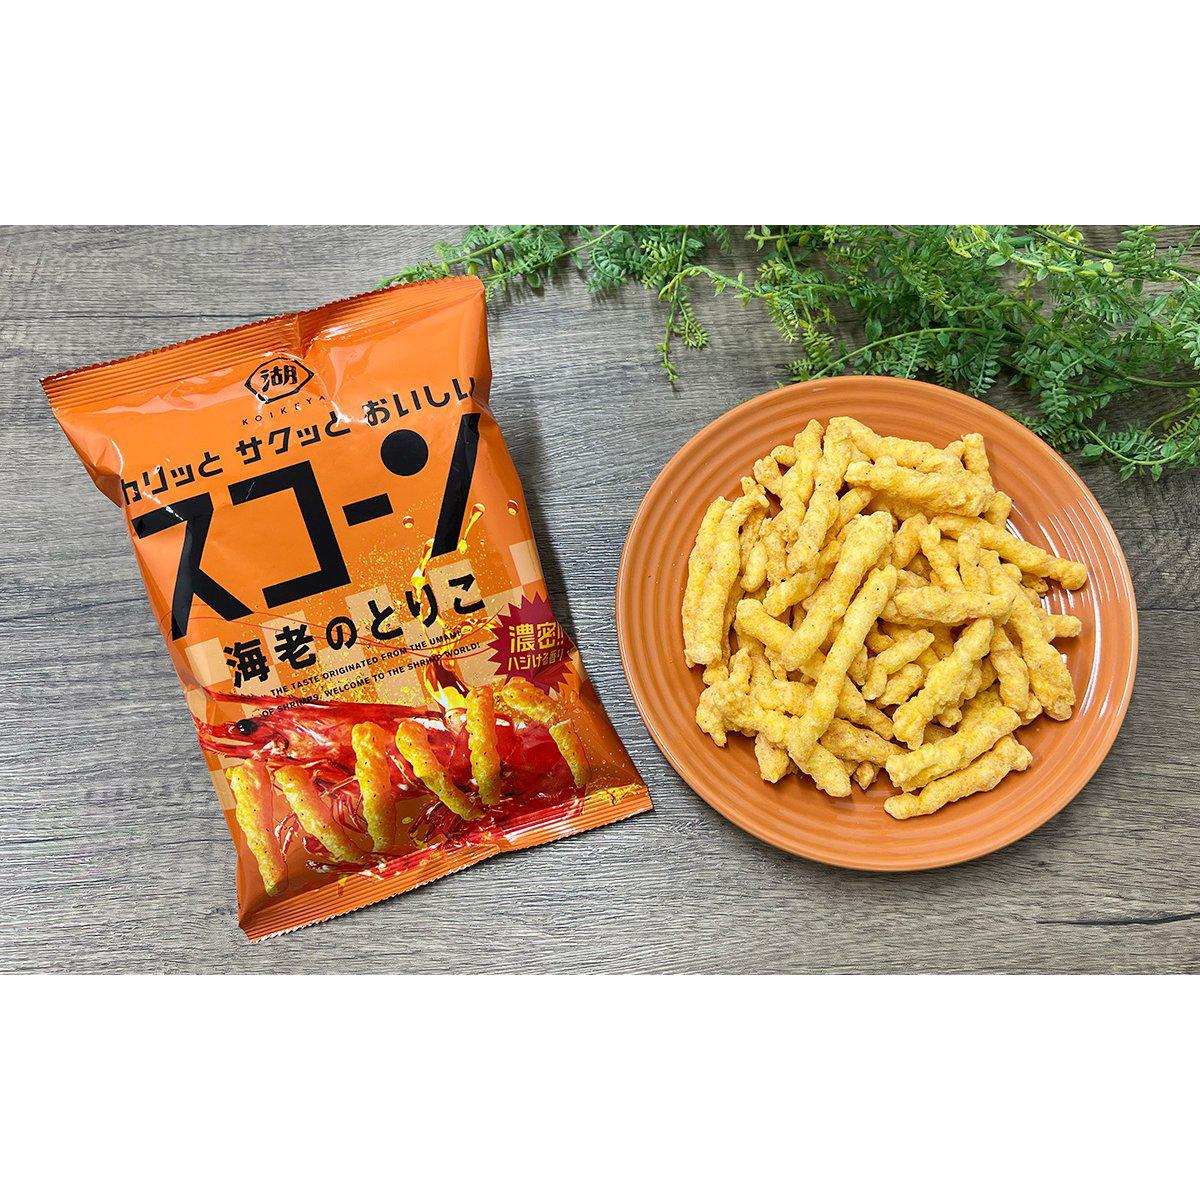 Koikeya Scorn Crispy & Rich Shrimp Corn Puffs Snack 73g (Pack of 3)